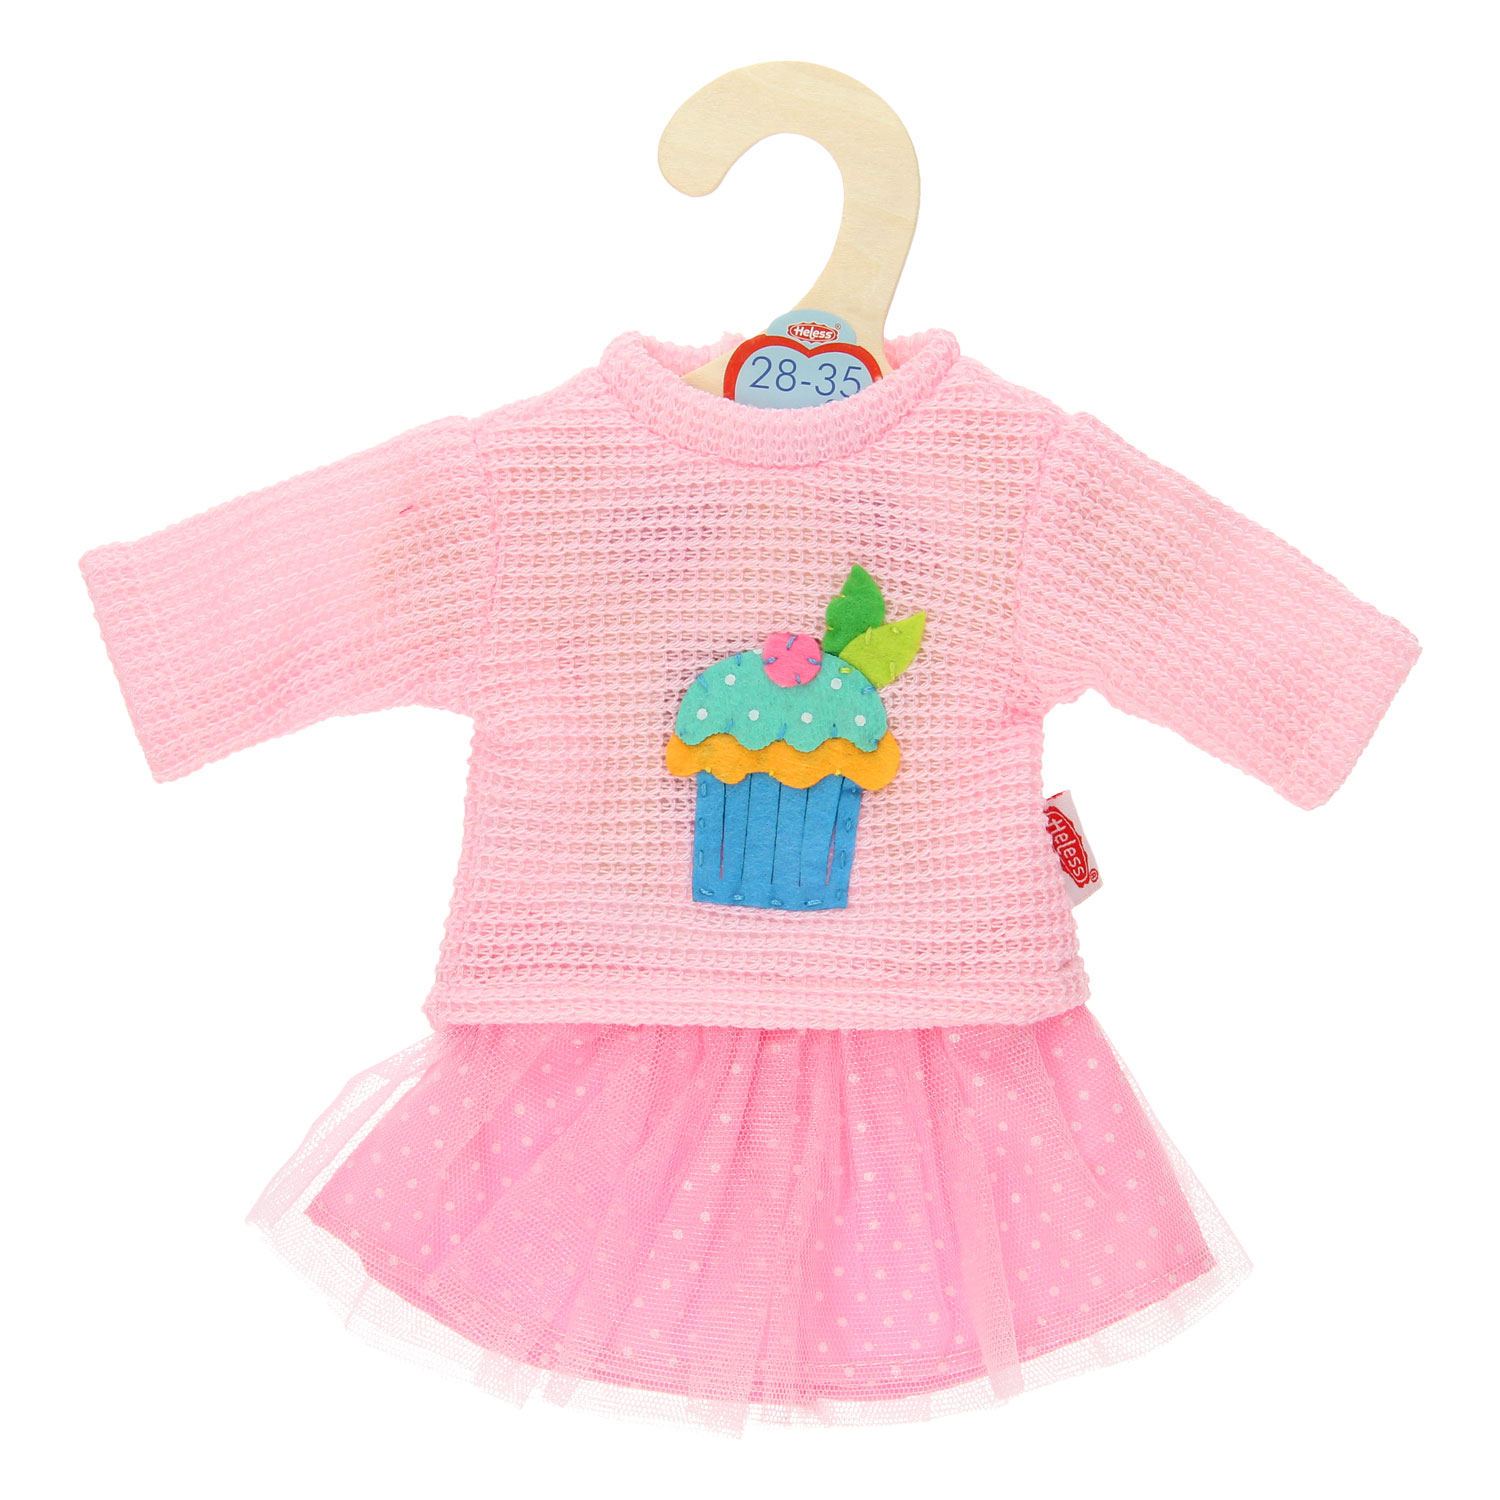 roem aanplakbiljet Zorg Dolls Pullover with Skirt Pink, 28-35 cm | Thimble Toys